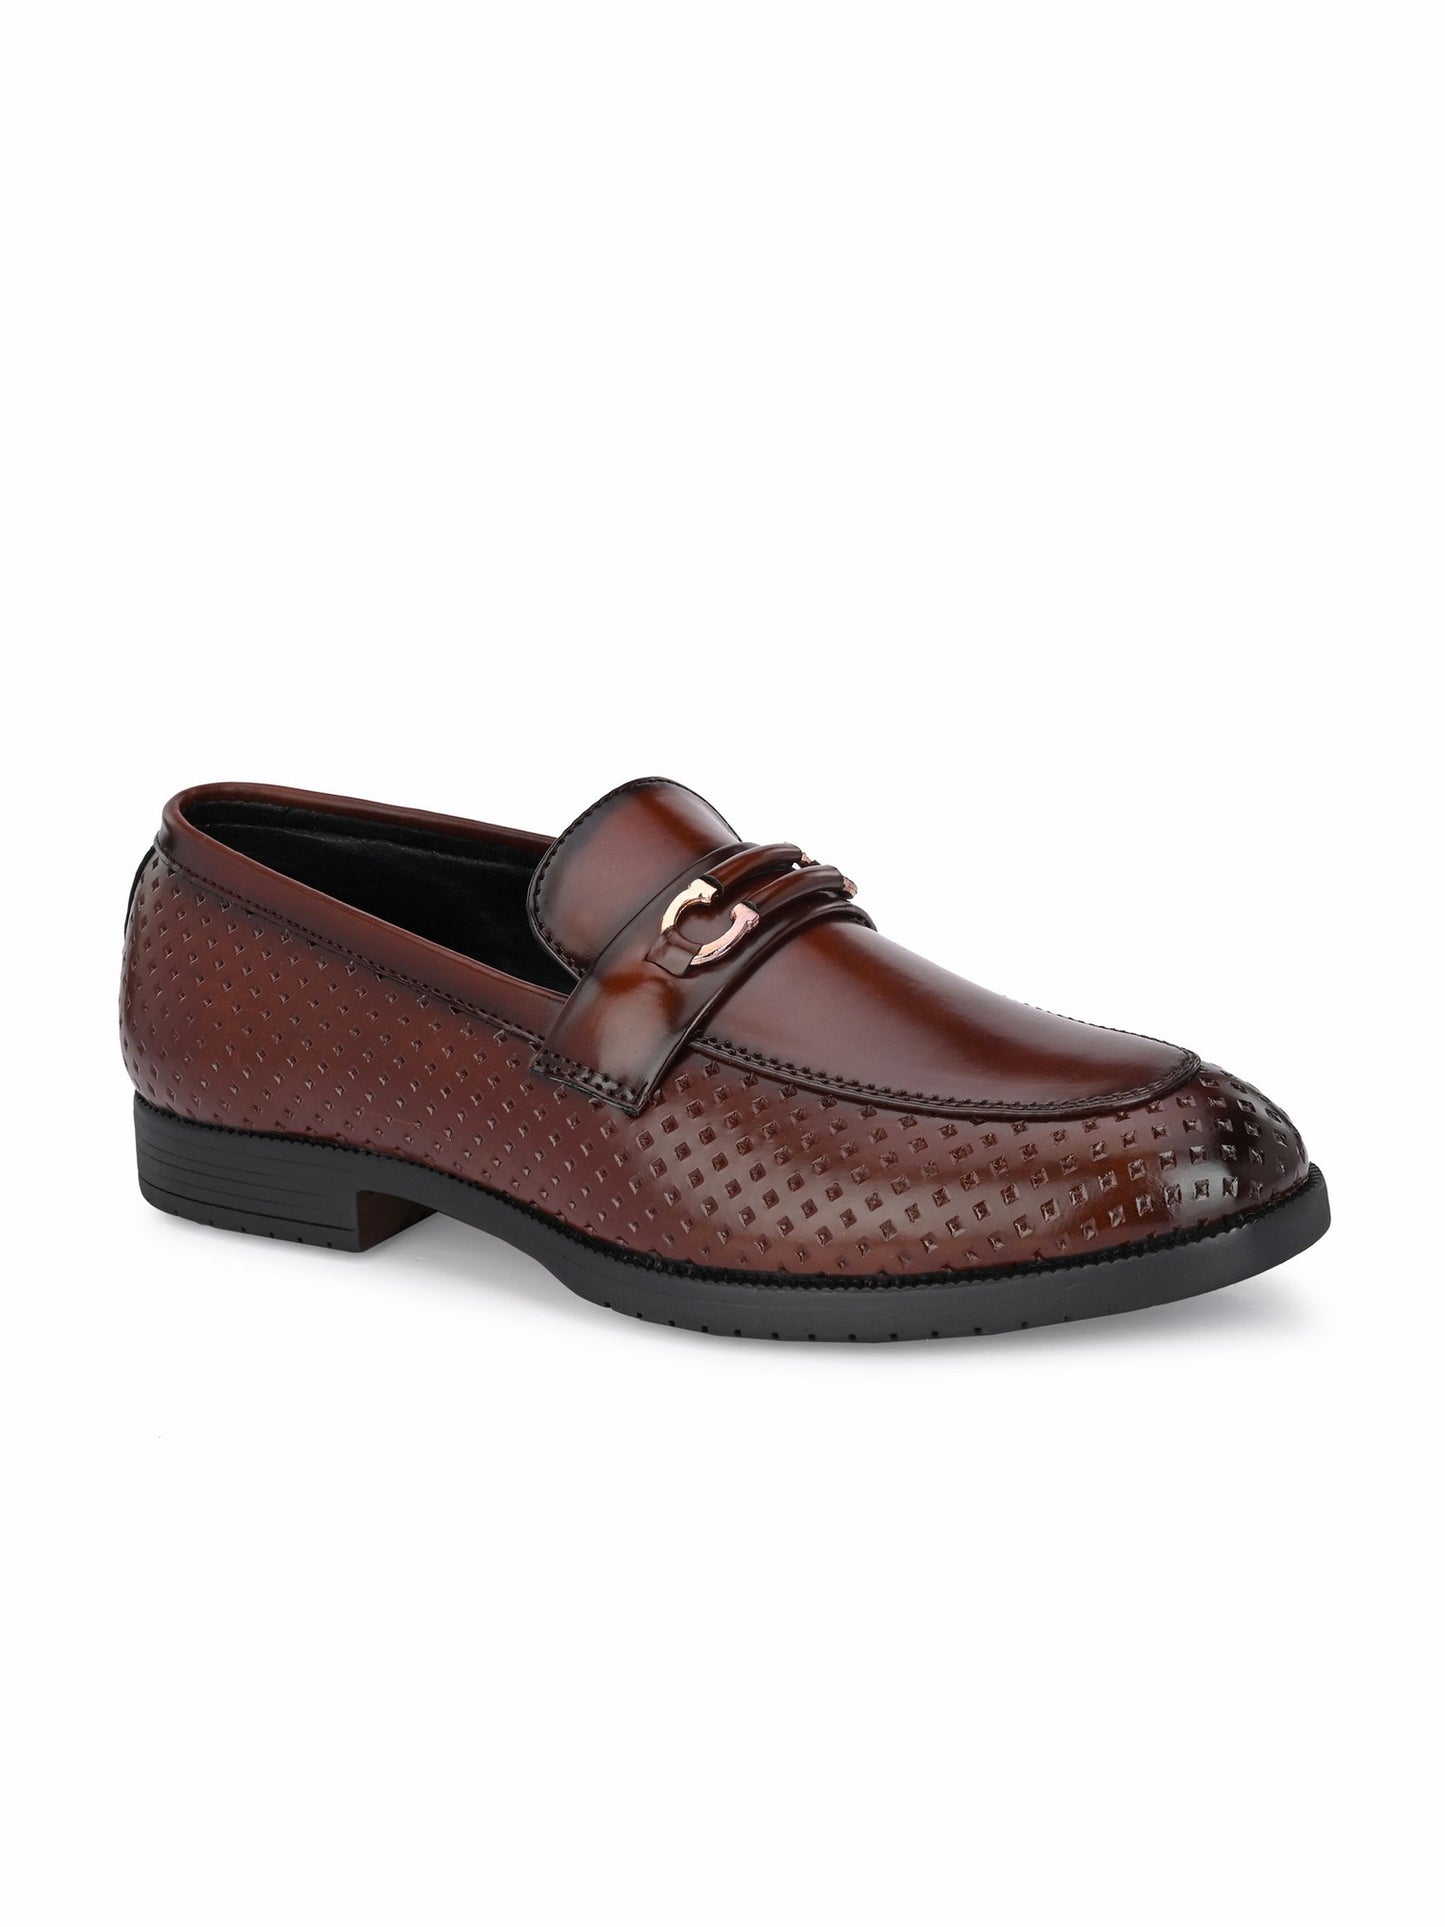 Guava Men's Brown Slip On Party Formal Shoes (GV15JA793)